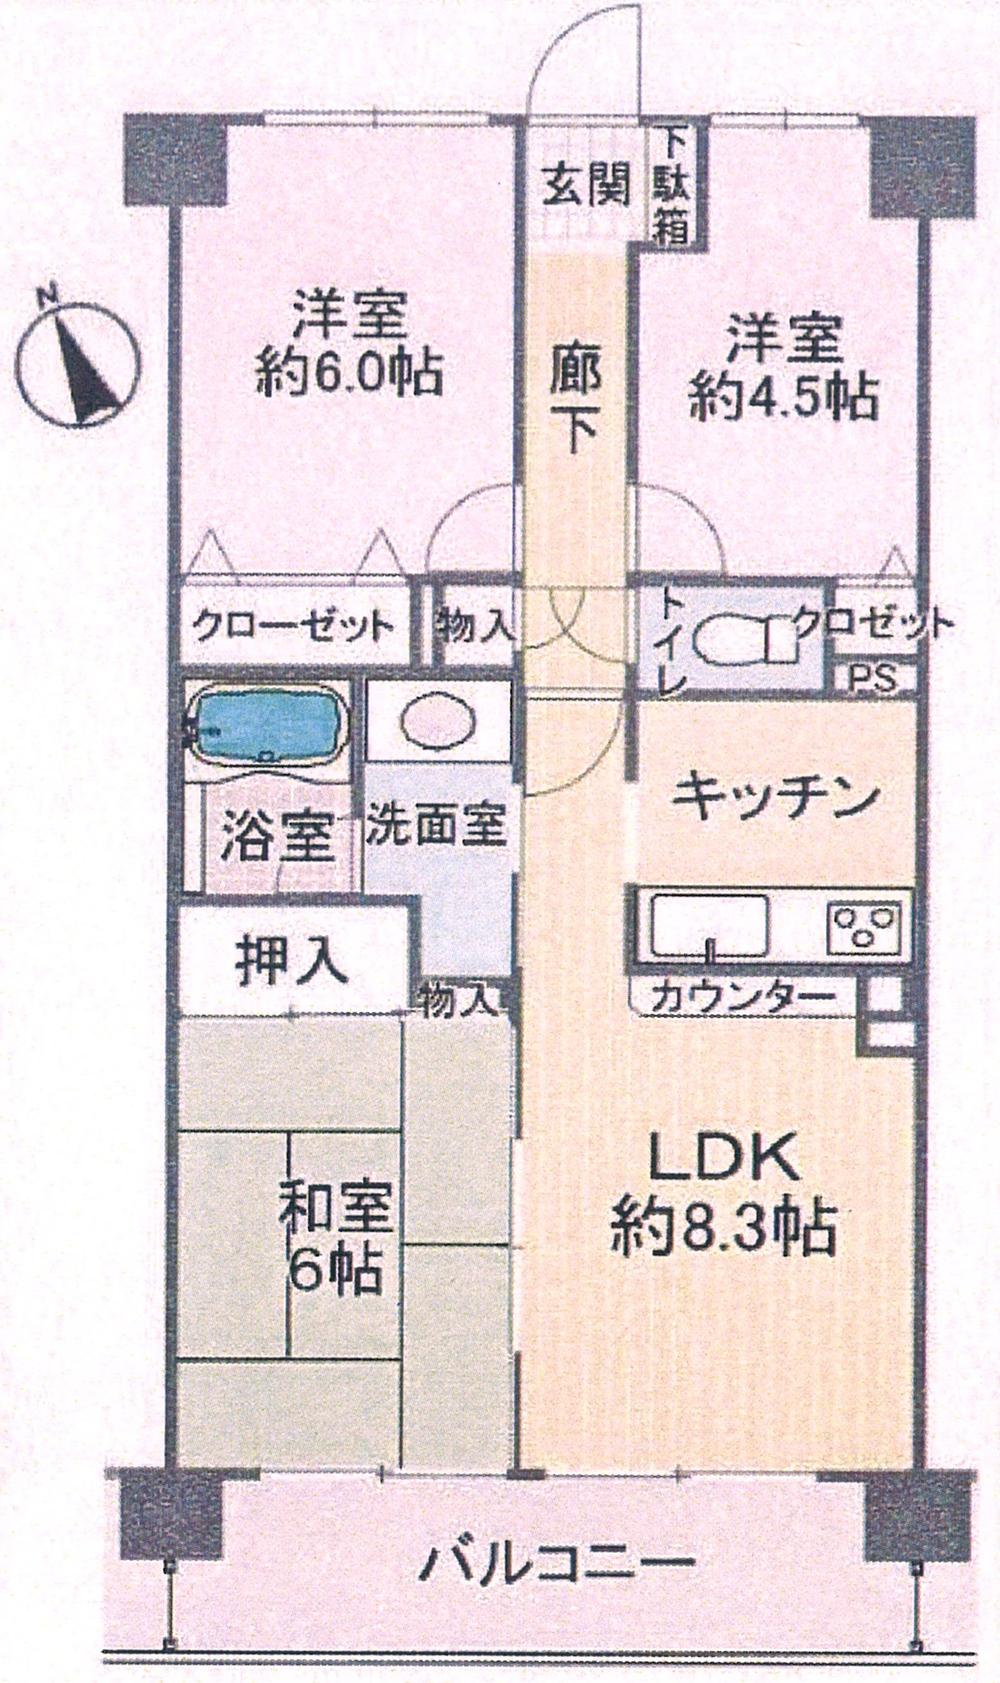 Floor plan. 3LK, Price 20.8 million yen, Occupied area 61.48 sq m , Balcony area 8.56 sq m